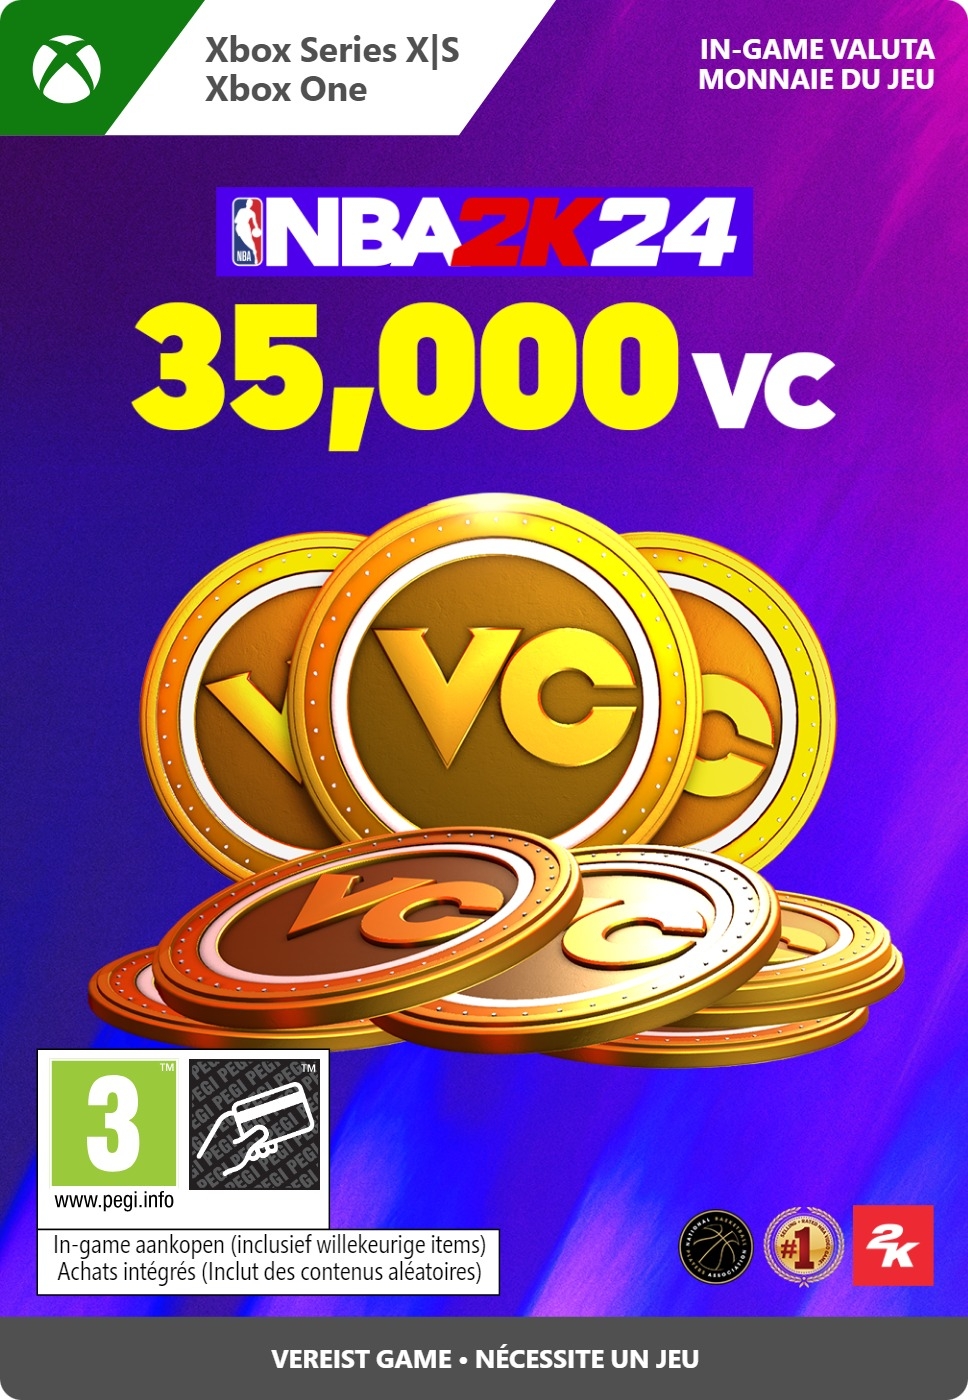 35.000 Xbox NBA 2K24 VC (direct digitaal geleverd) GamesDirect®